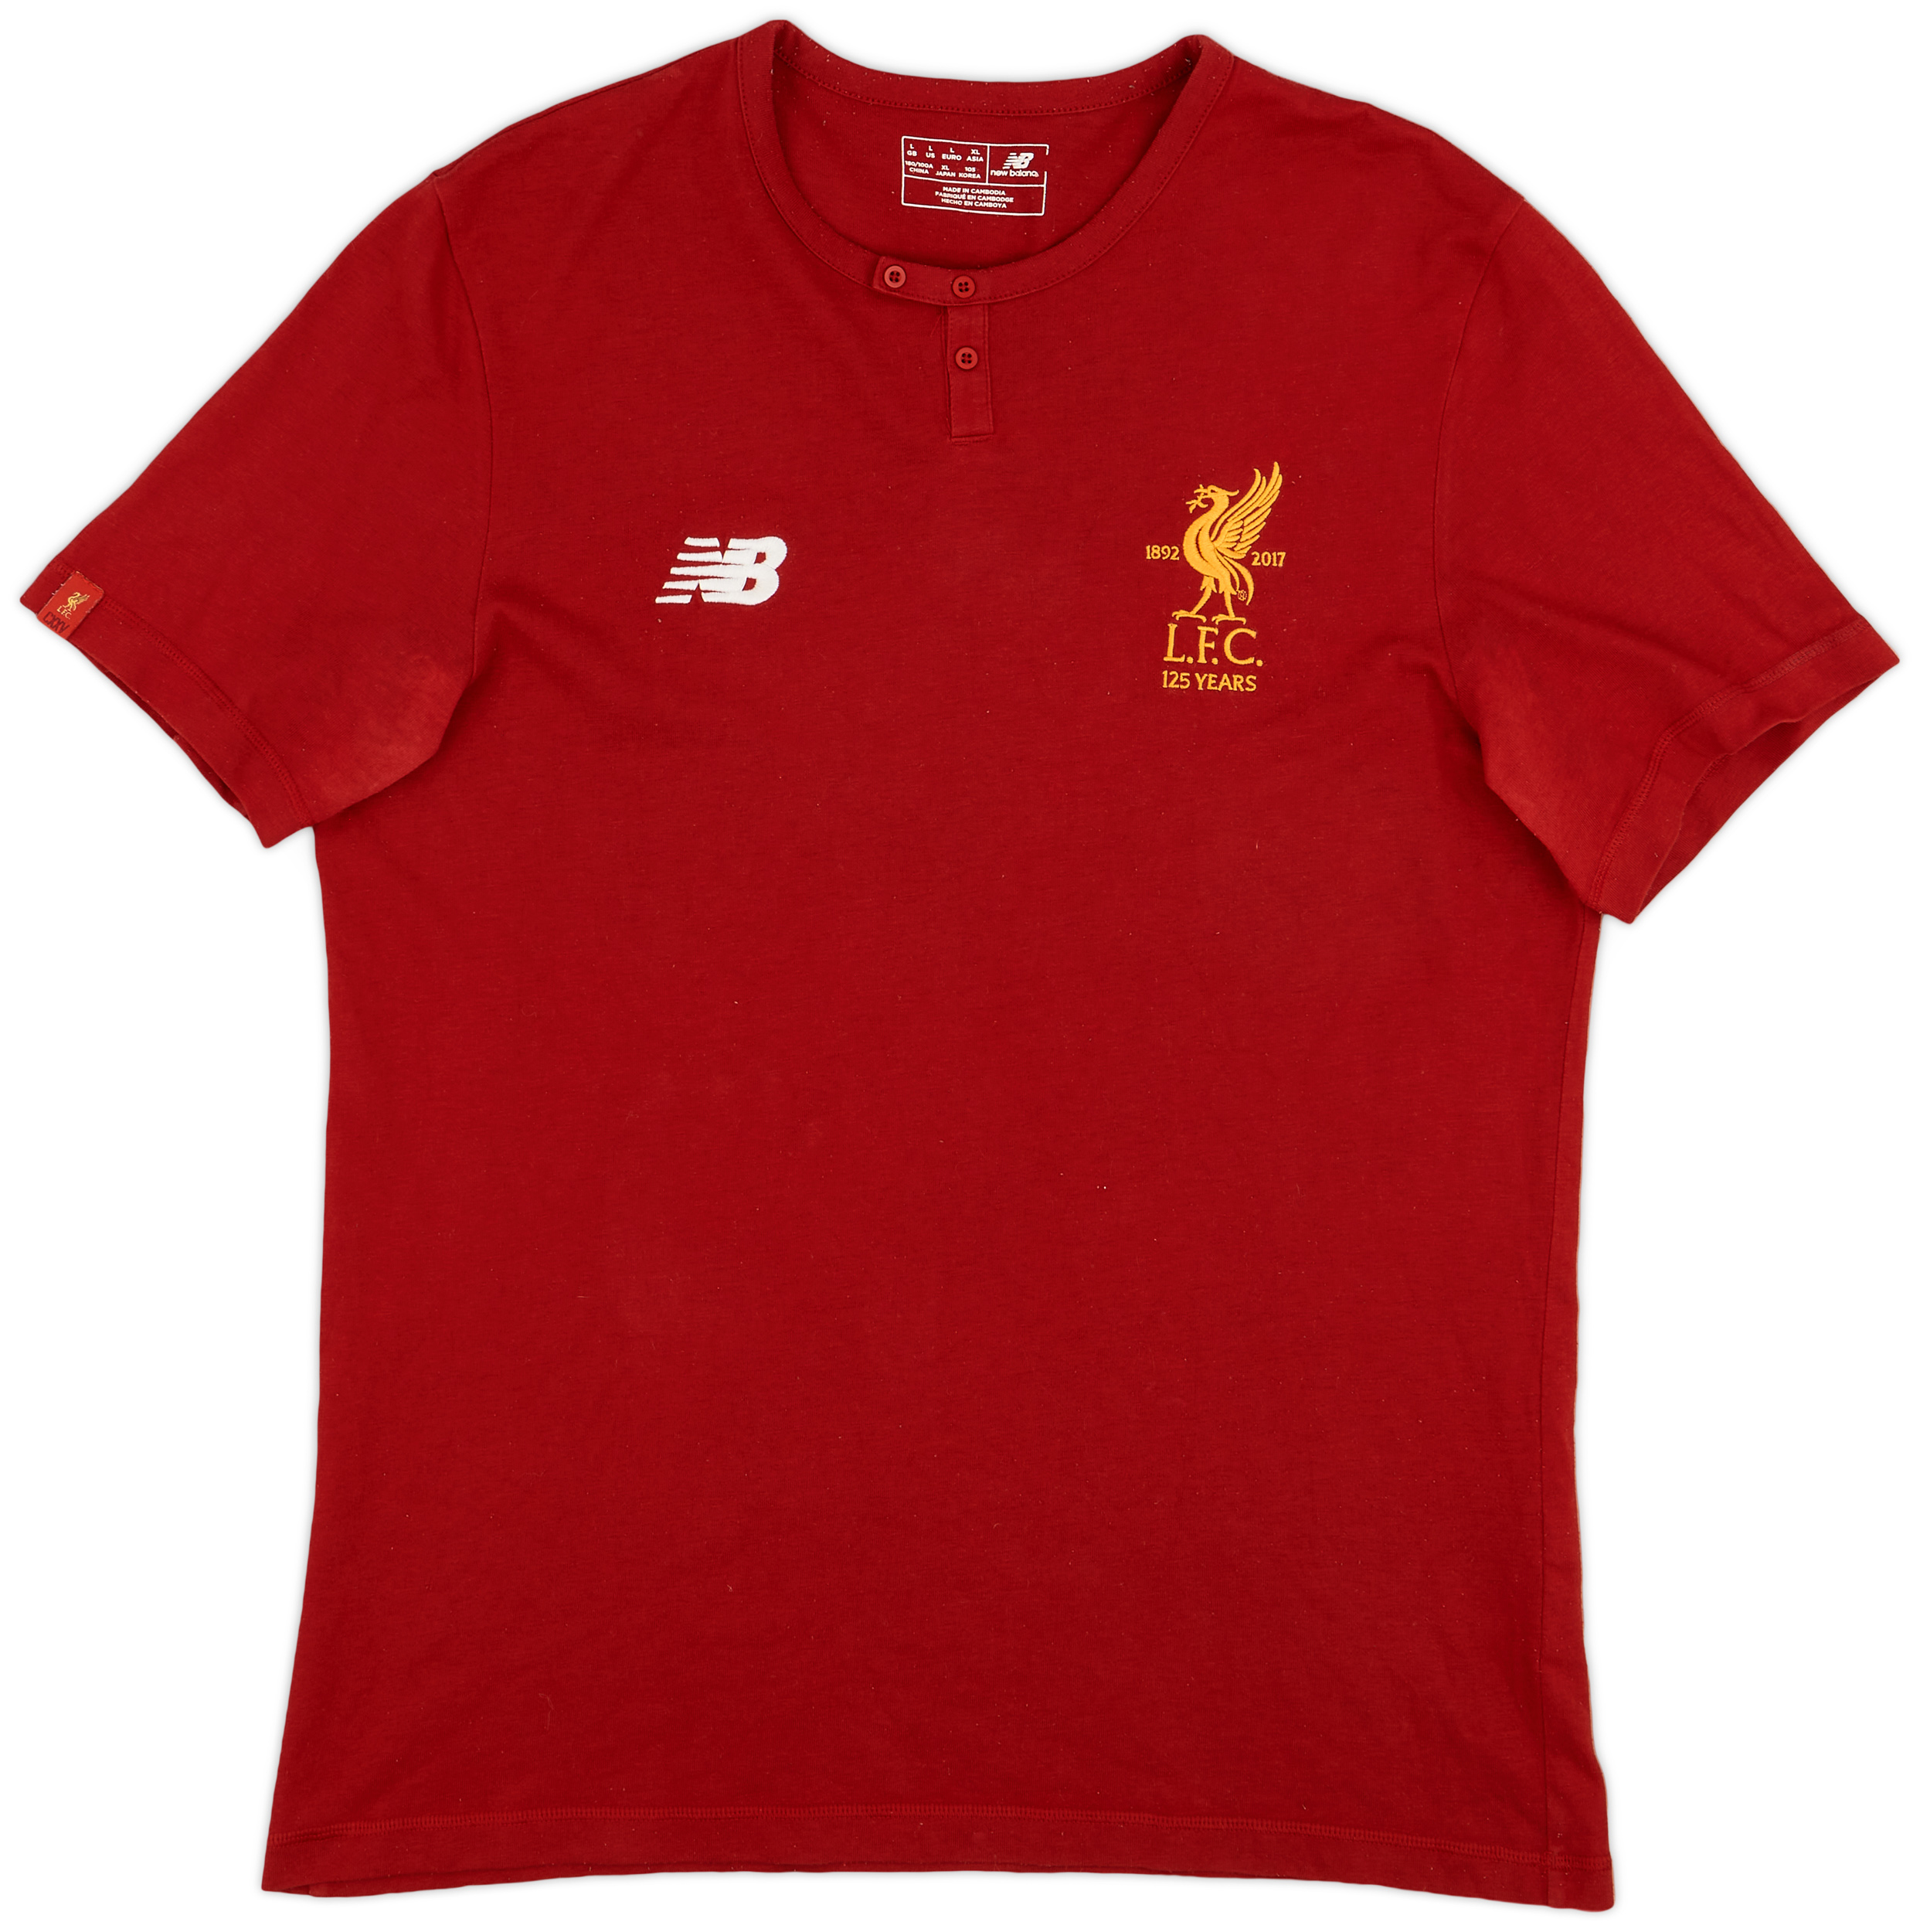 2017-18 Liverpool New Balance Cotton Shirt - 9/10 - ()